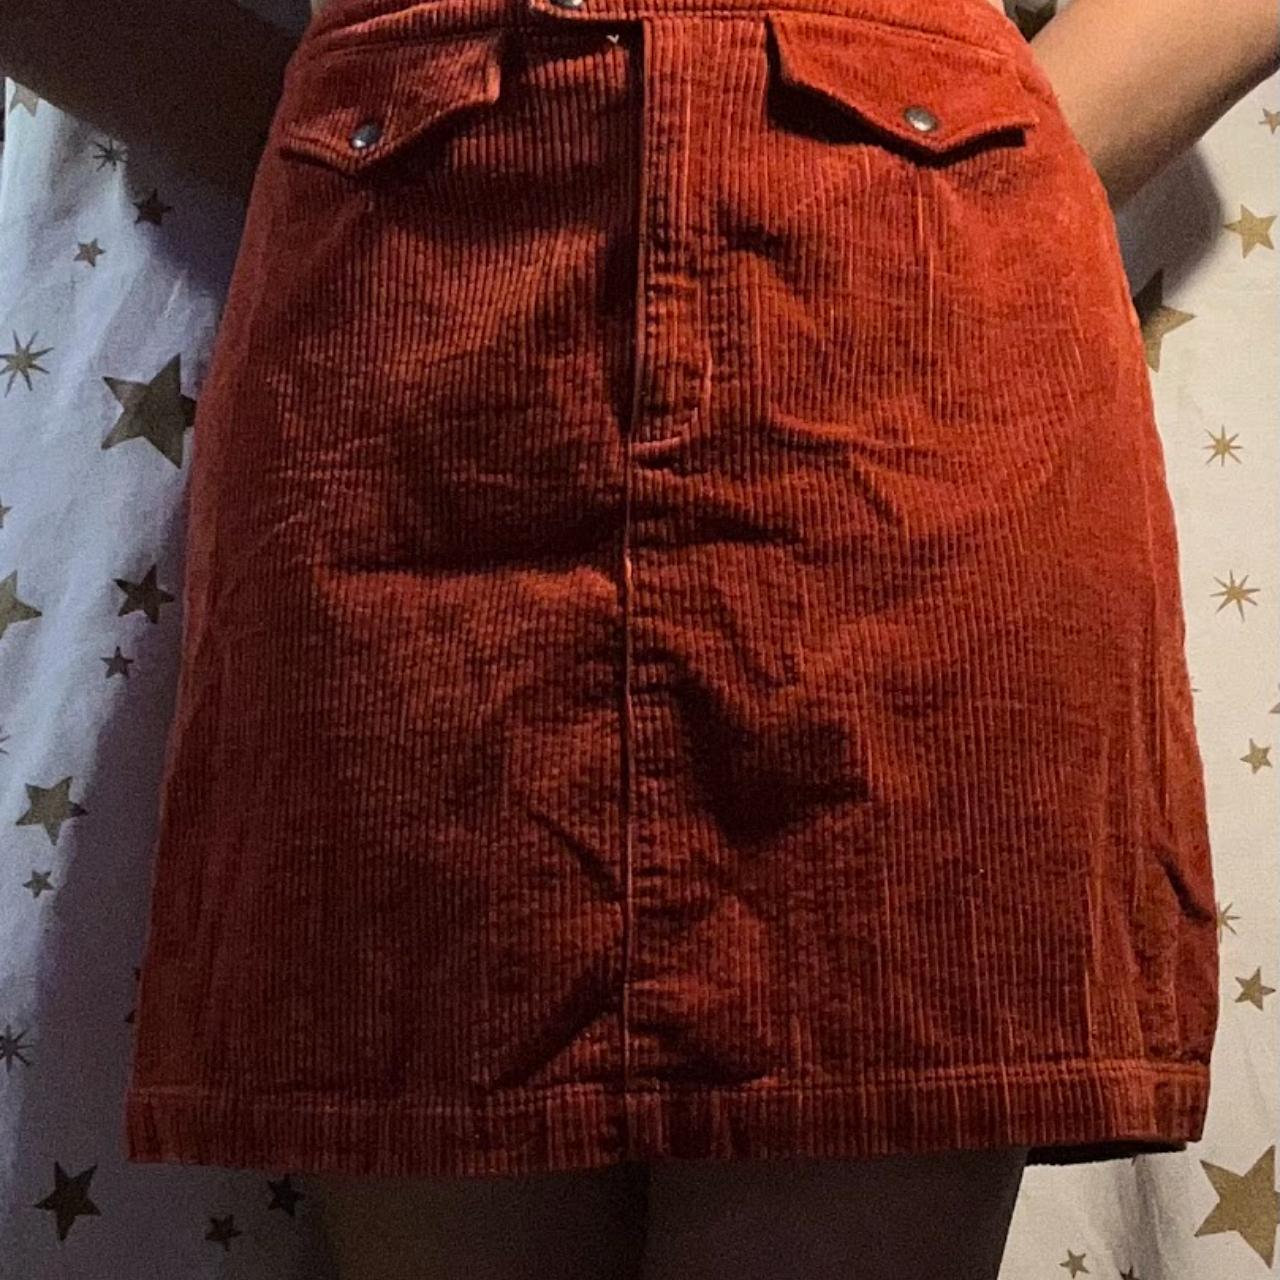 Corduroy Orange Skirt Size 8, Brand- Sigrid Olsen